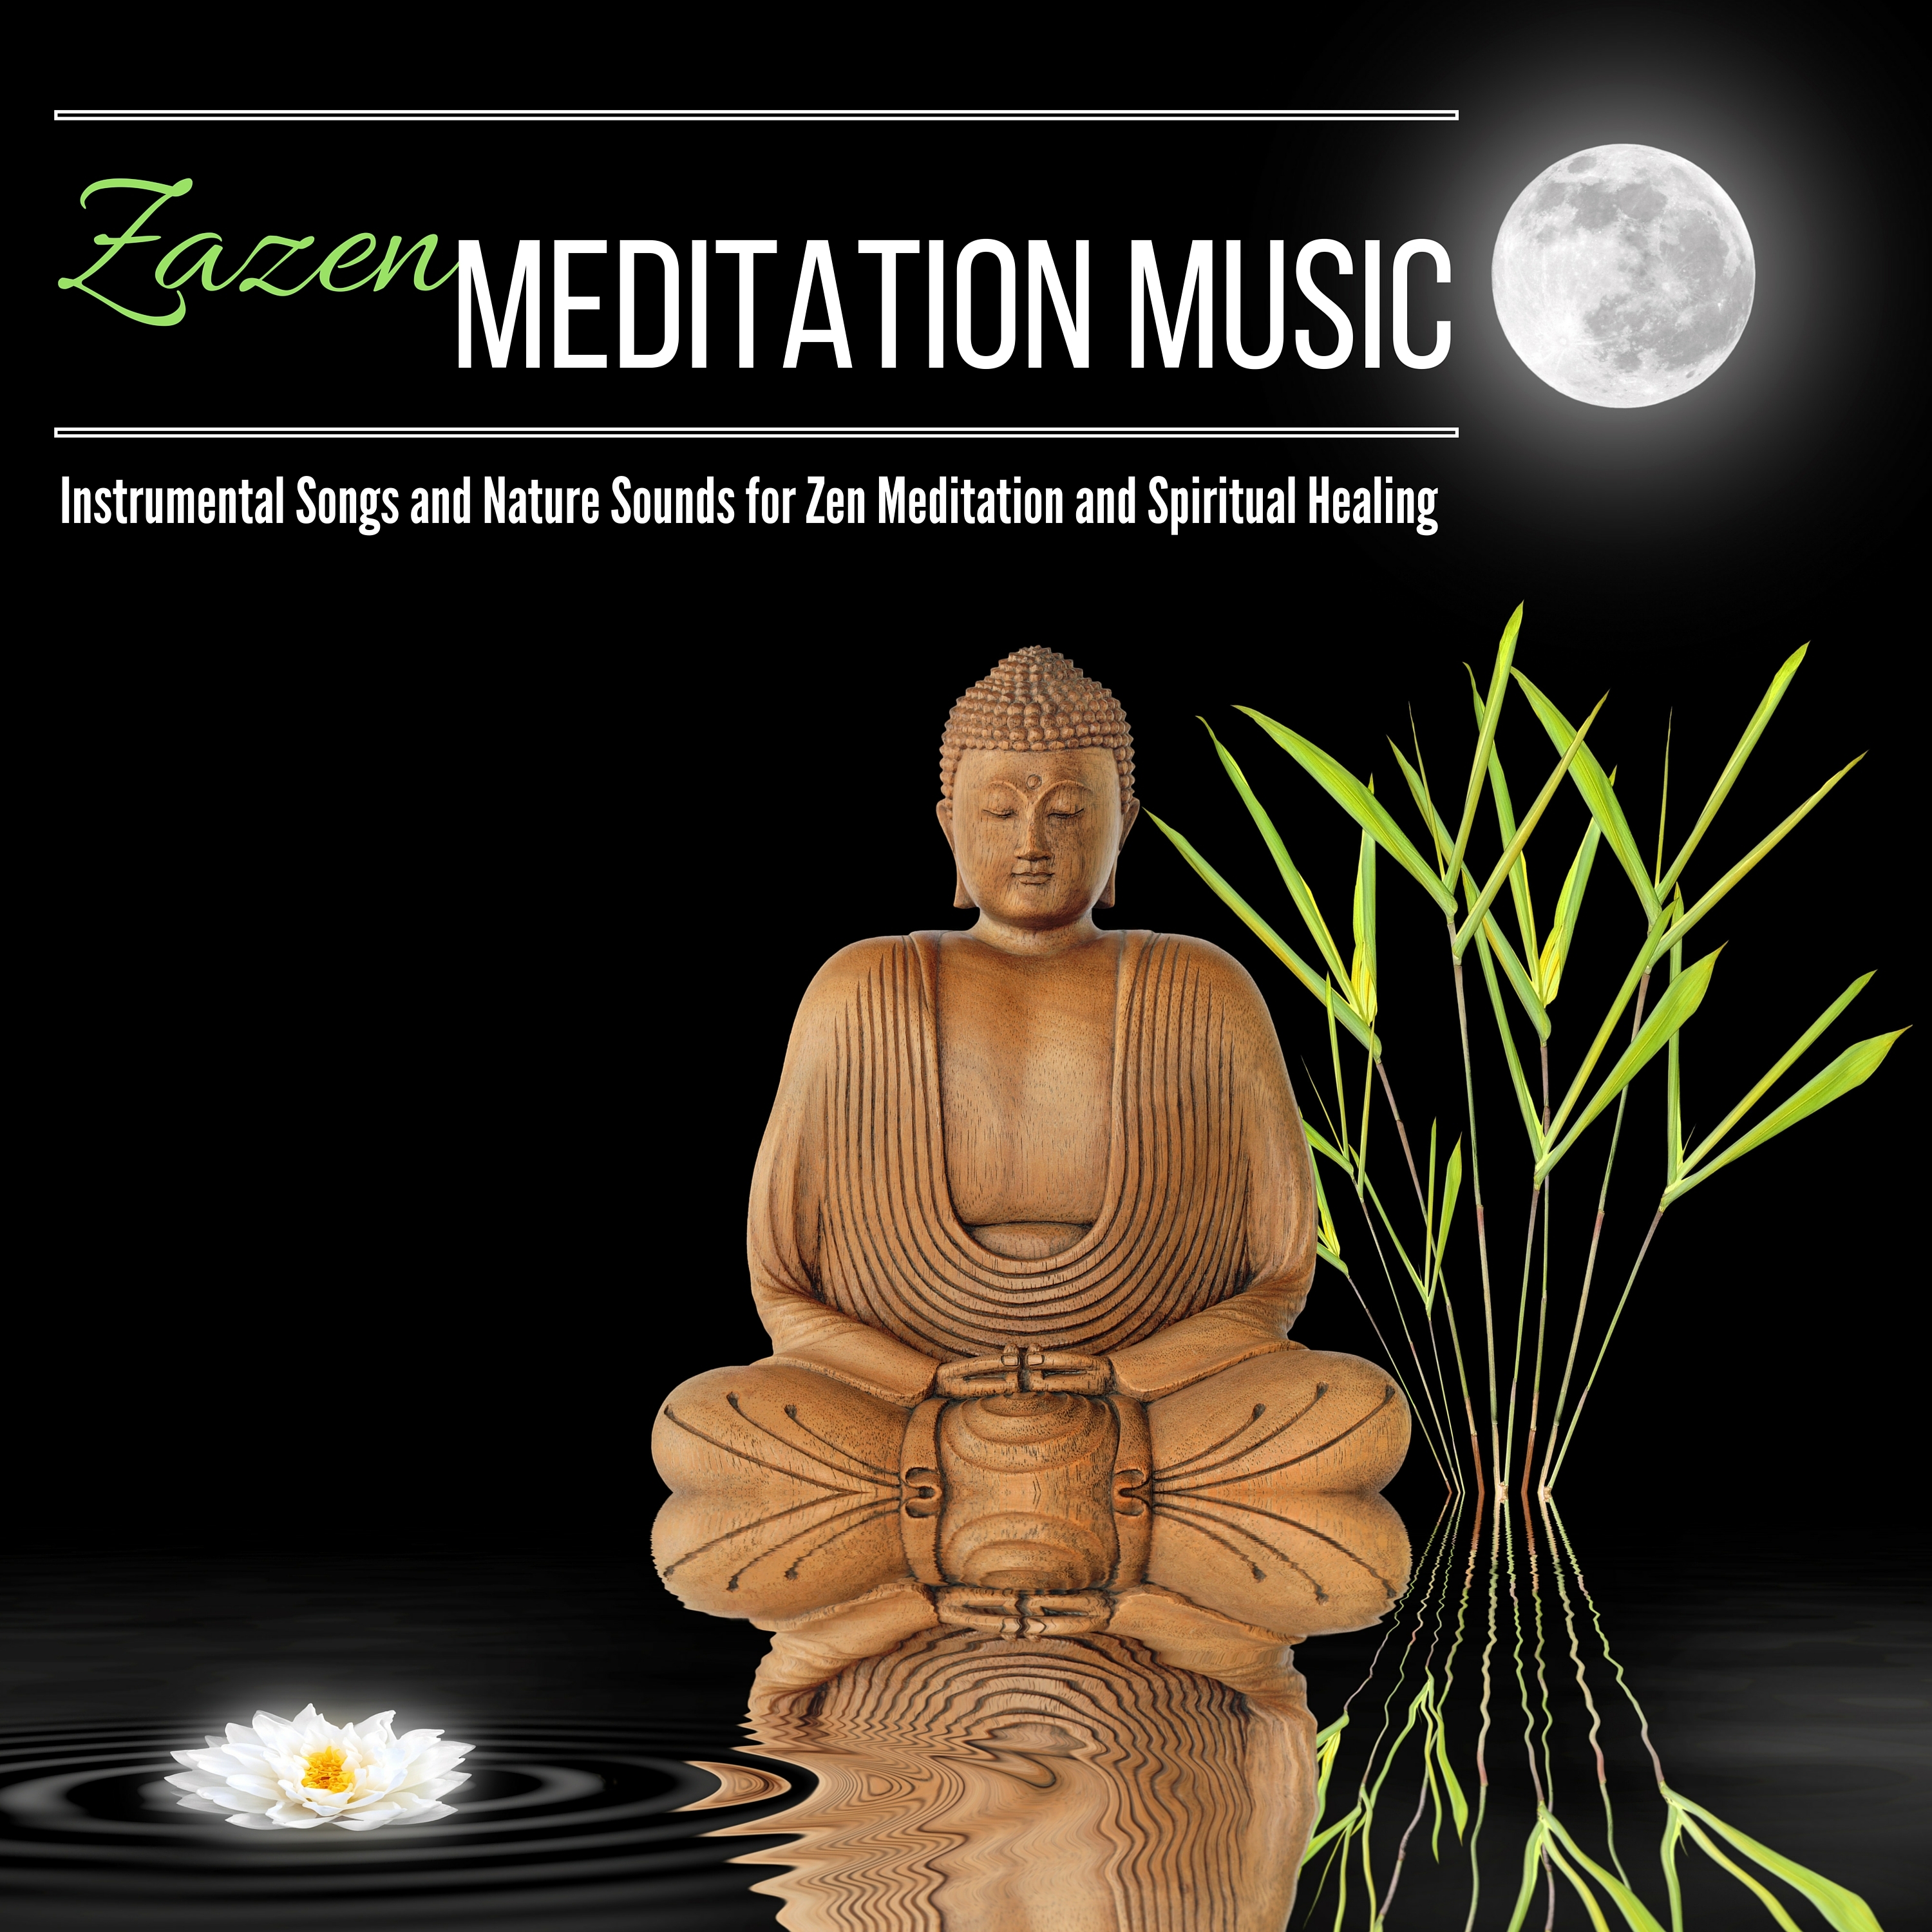 Zazen Meditation Music - Instrumental Songs and Nature Sounds for Zen Meditation and Spiritual Healing